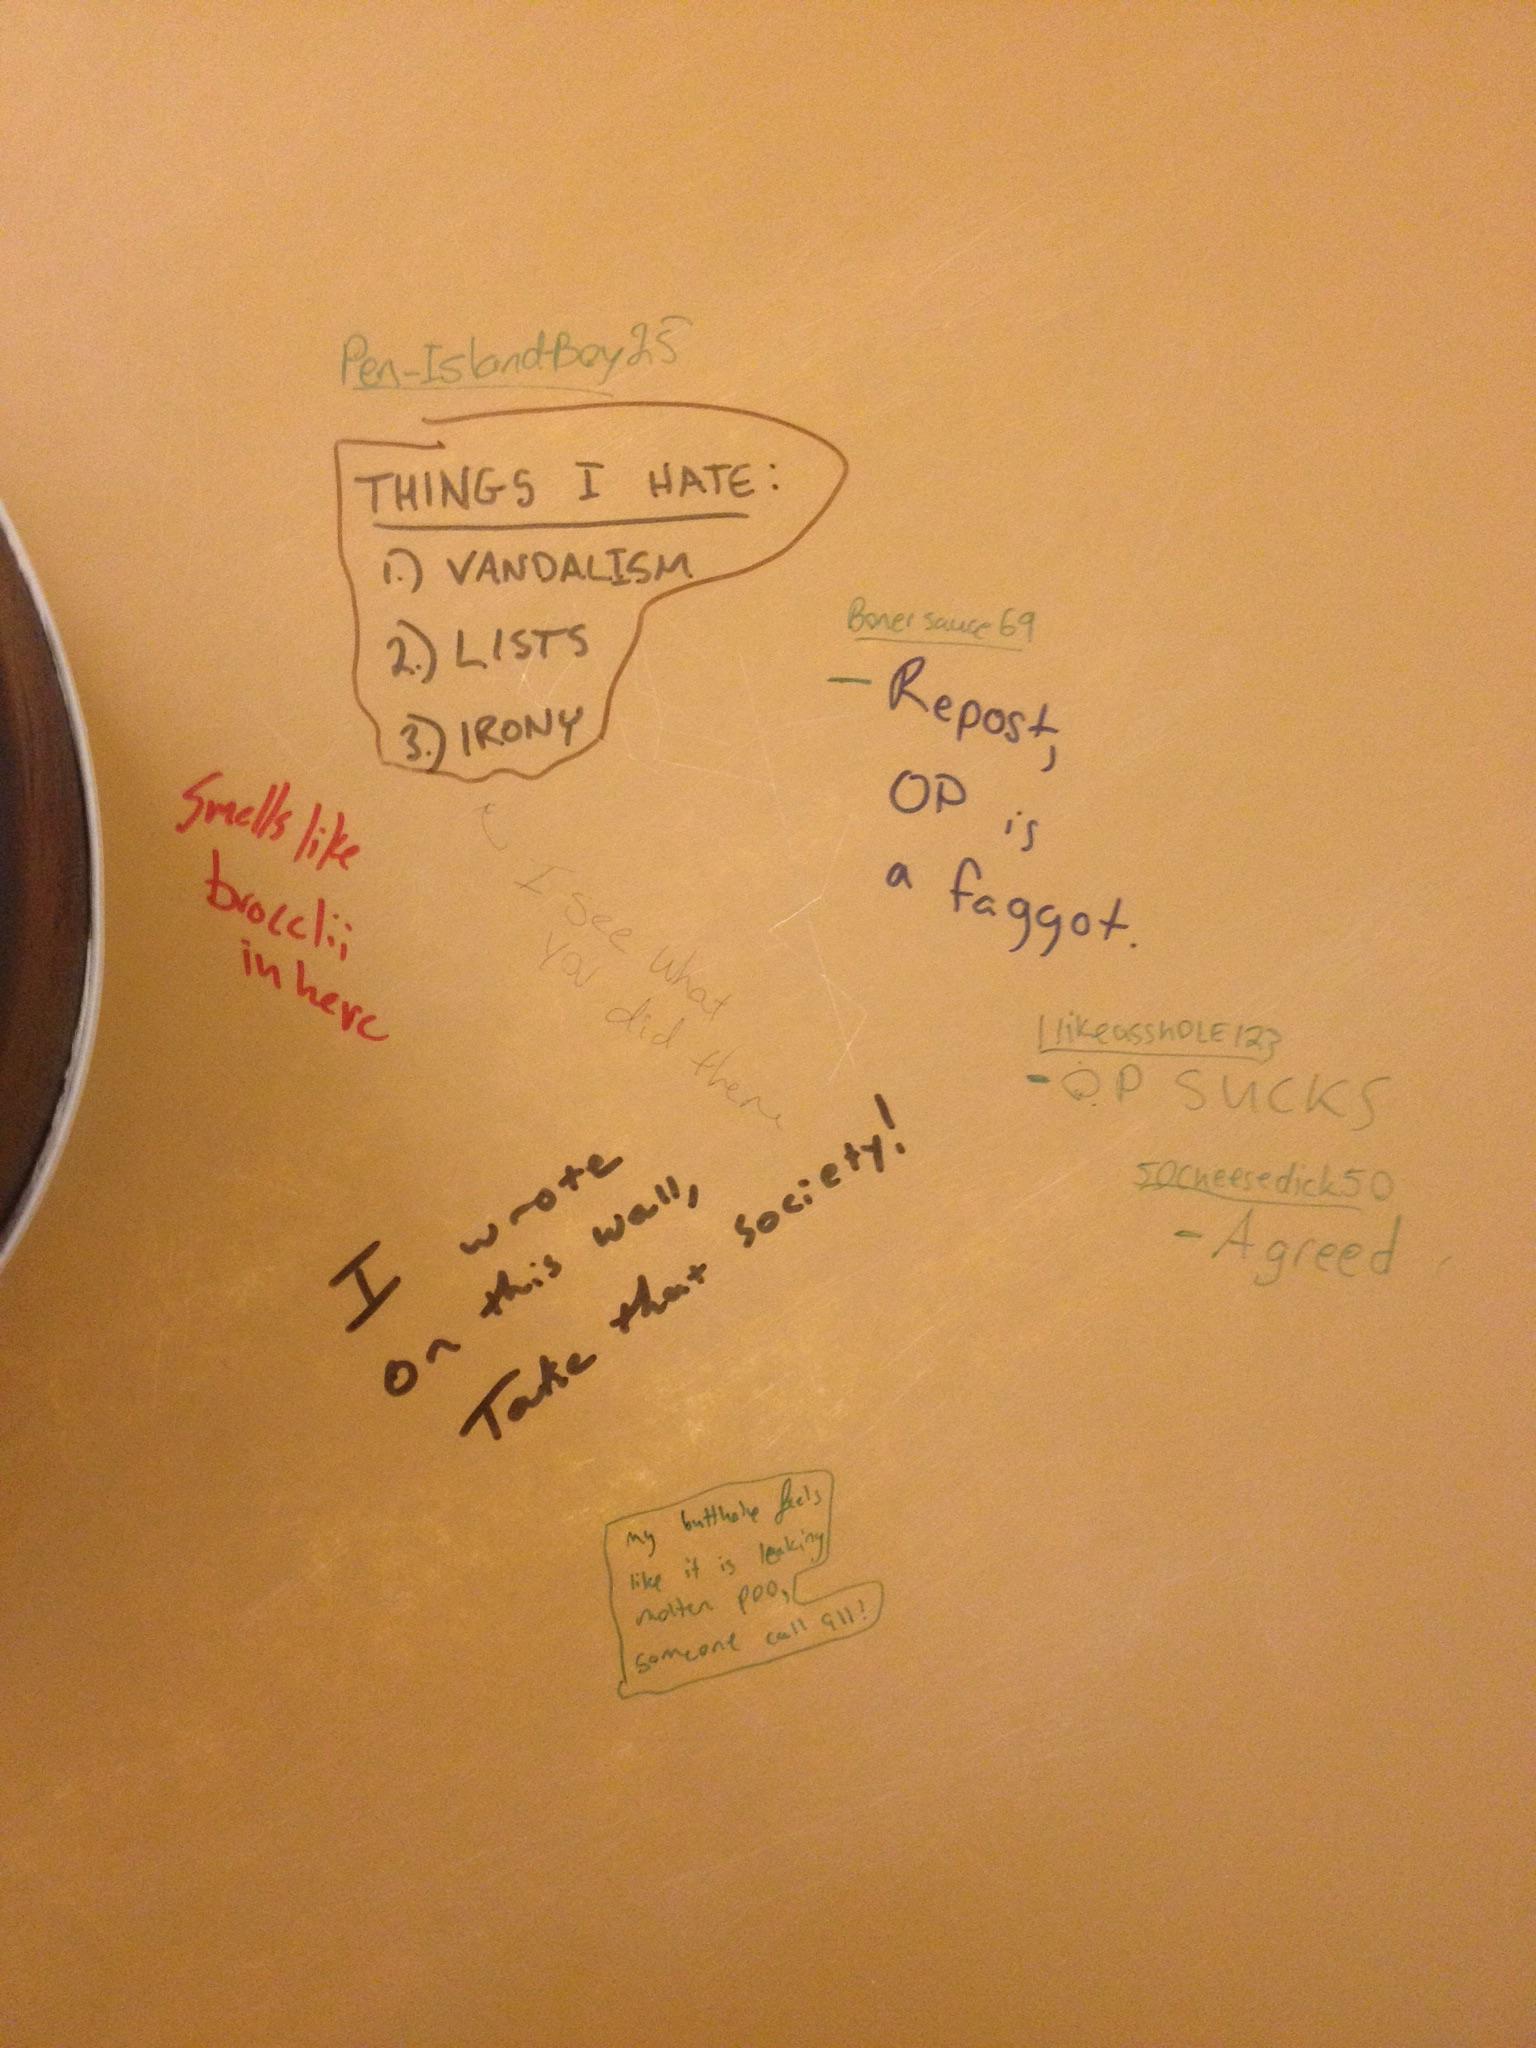 Good ol' bathroom stall humor in the philosophy department.